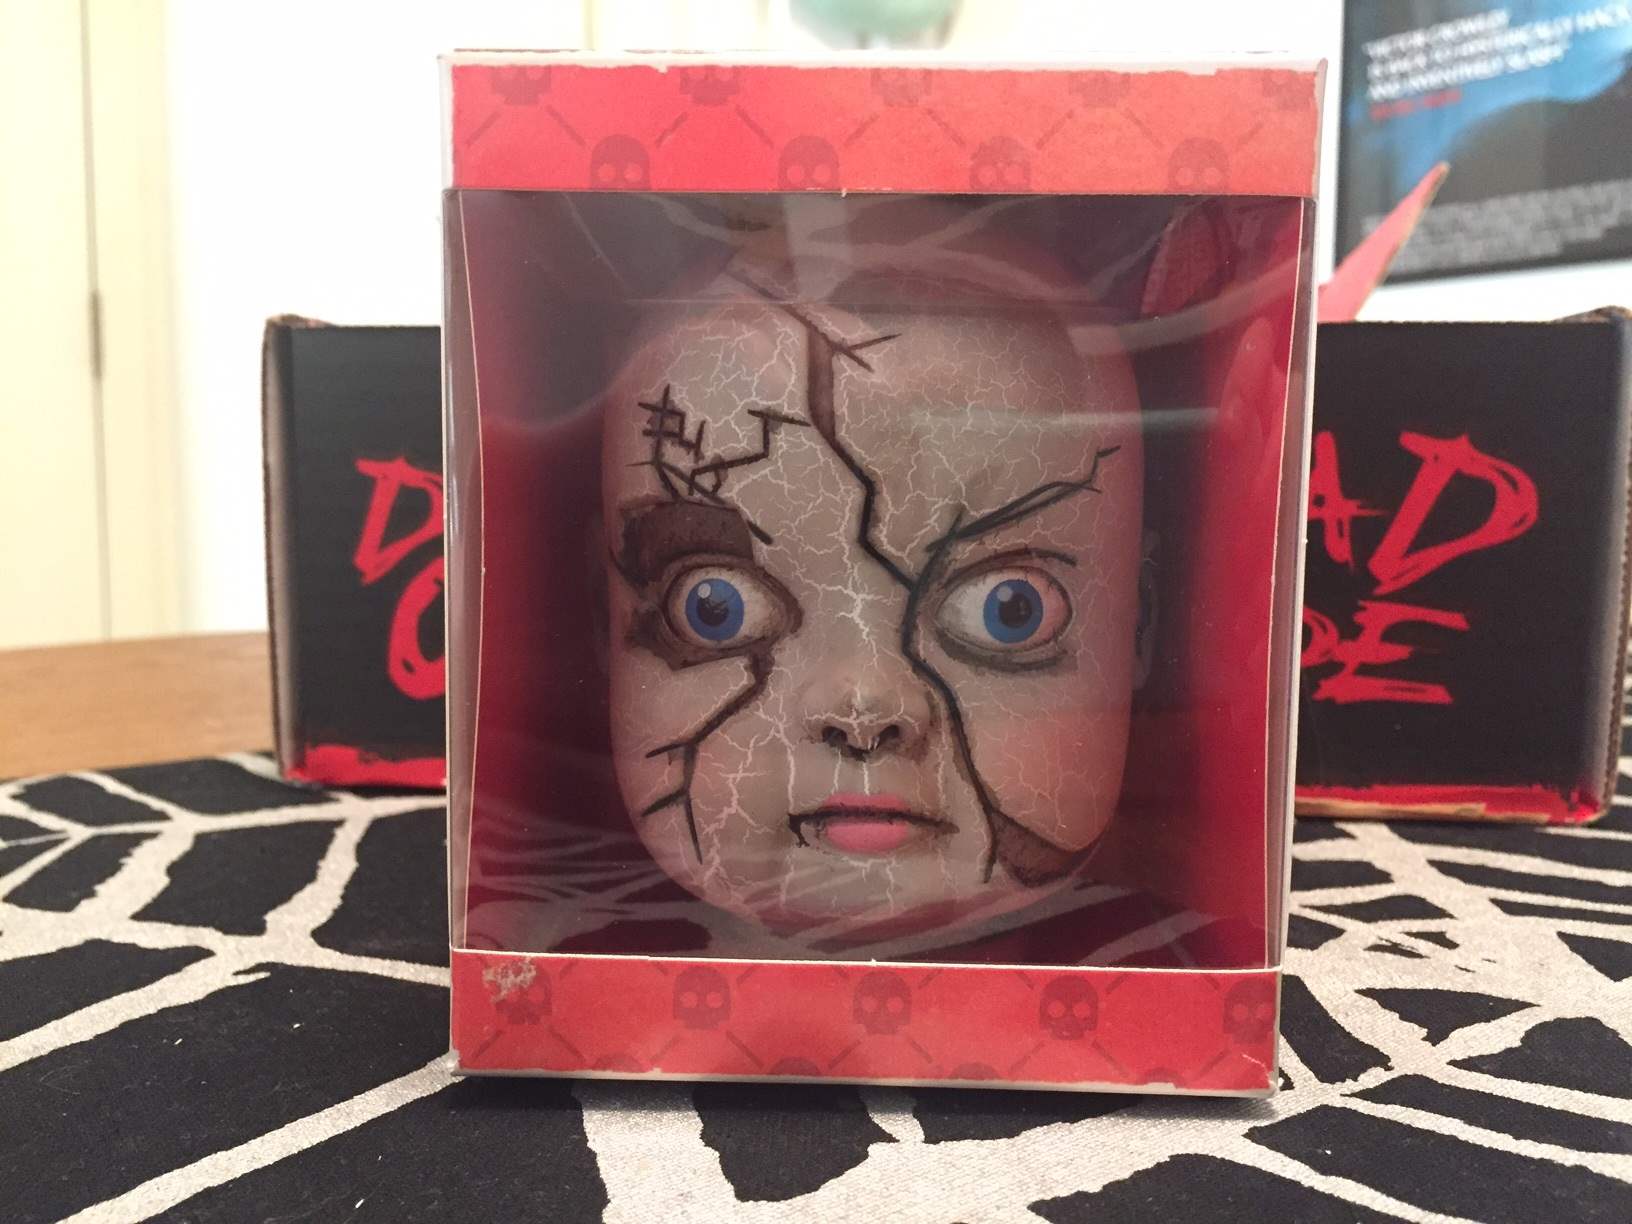 Creepy plastic doll head